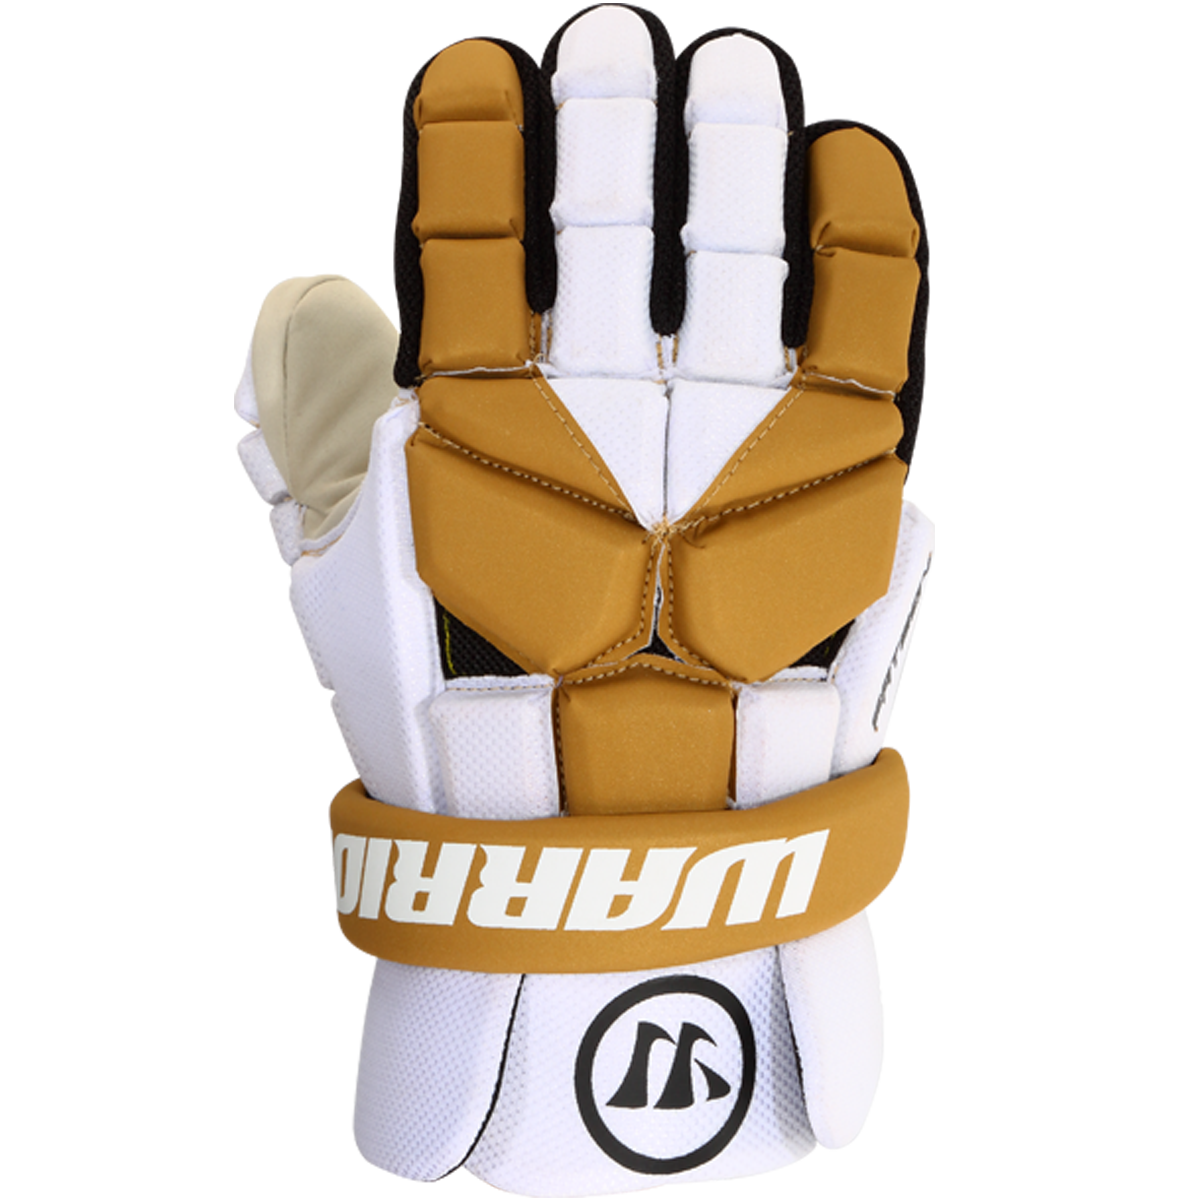 Warrior Fatboy Lacrosse Gloves